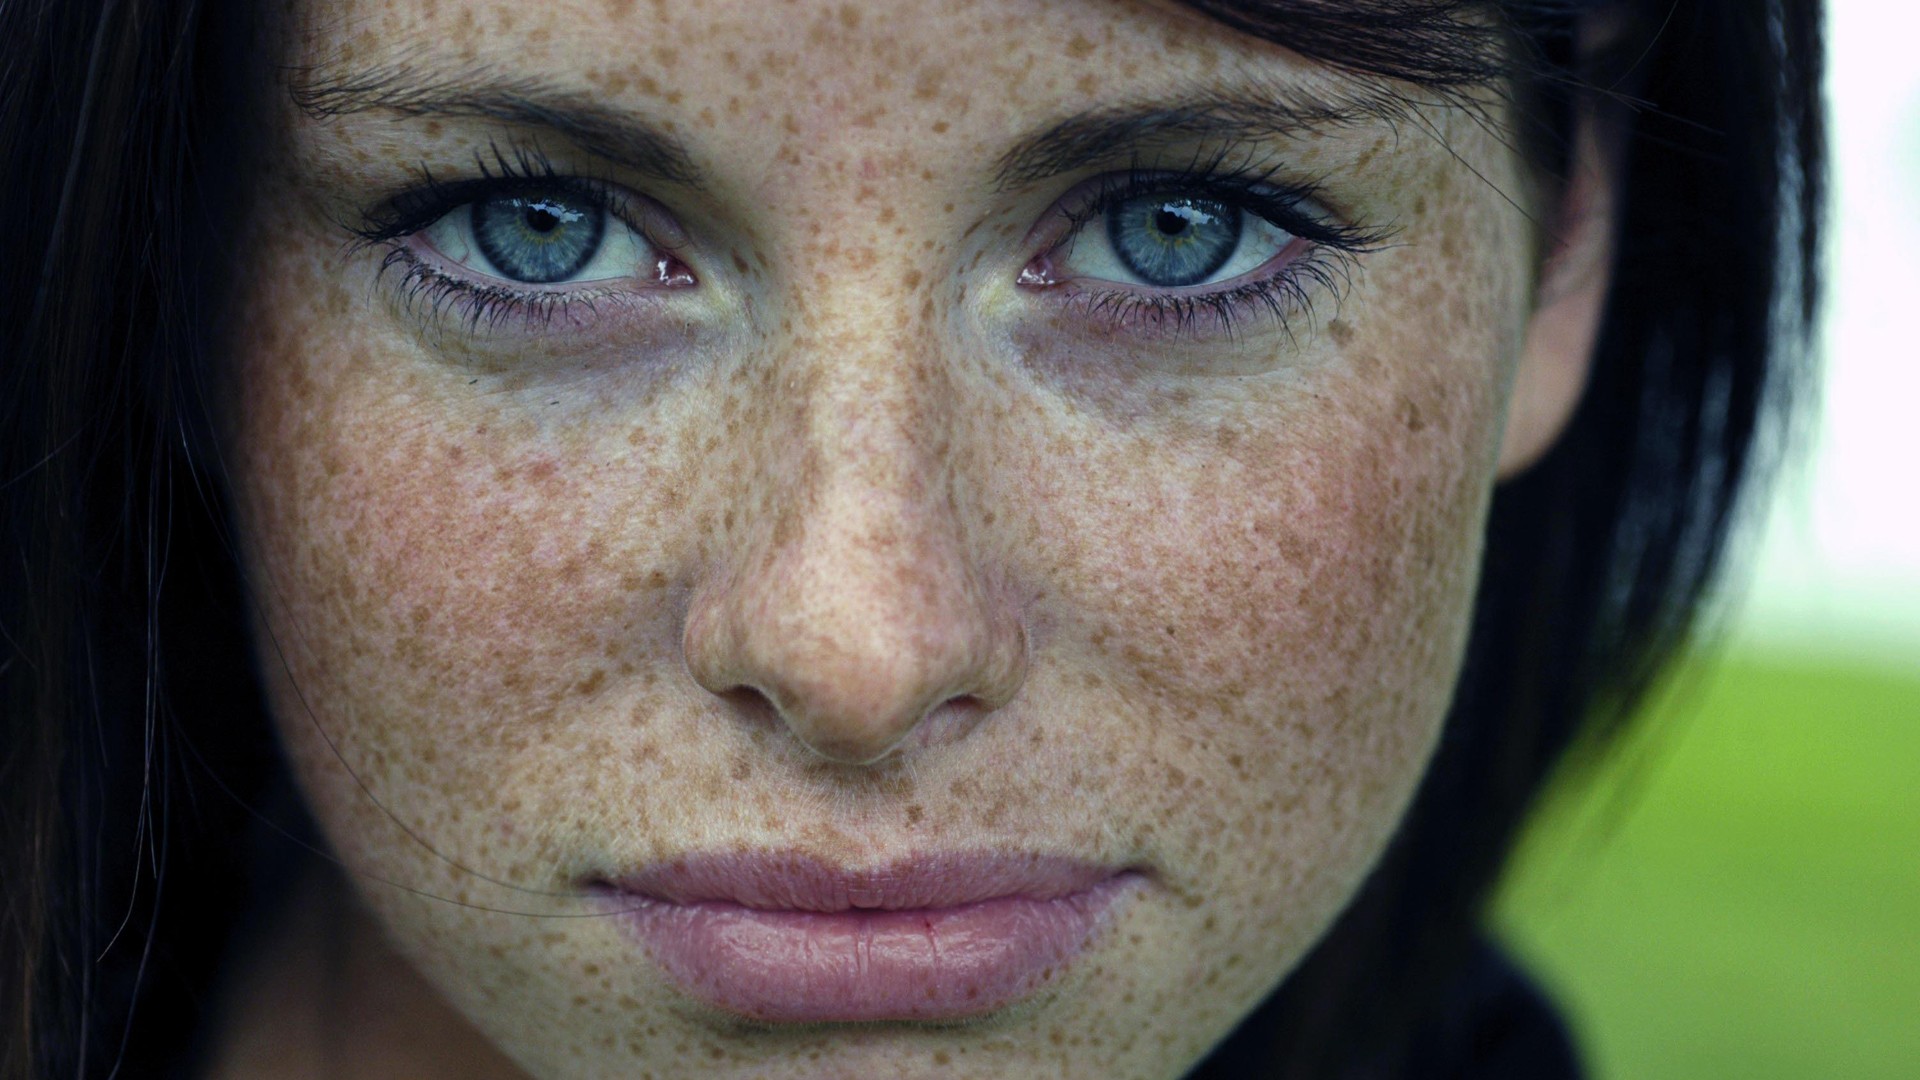 People 1920x1080 freckles blue eyes face closeup eyes women brunette looking at viewer